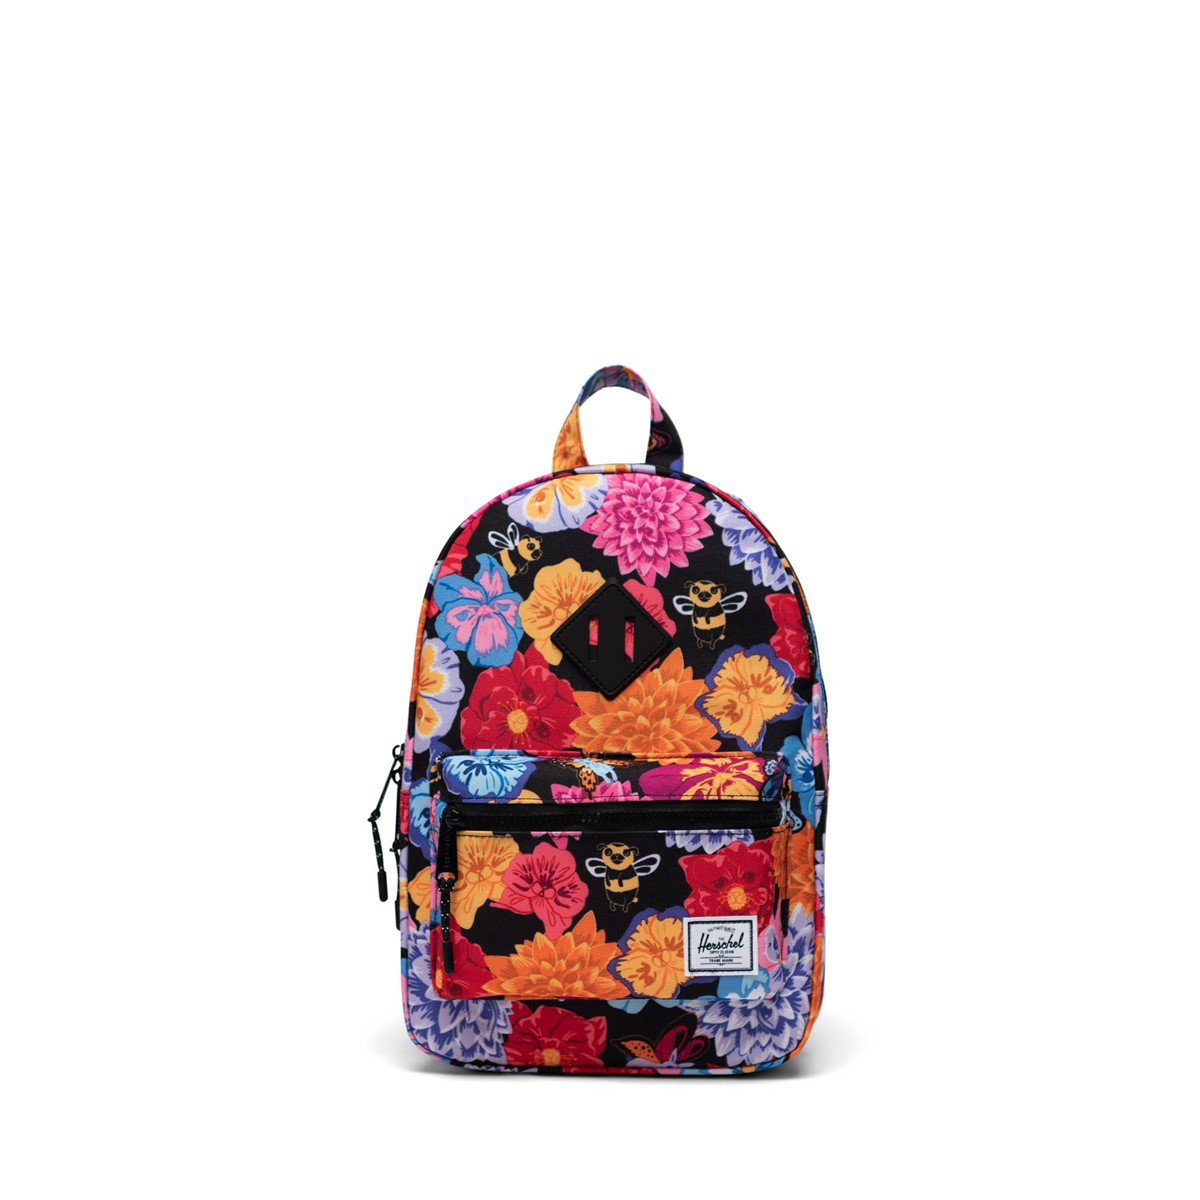 Kids' Heritage Backpack in Multicolor Floral